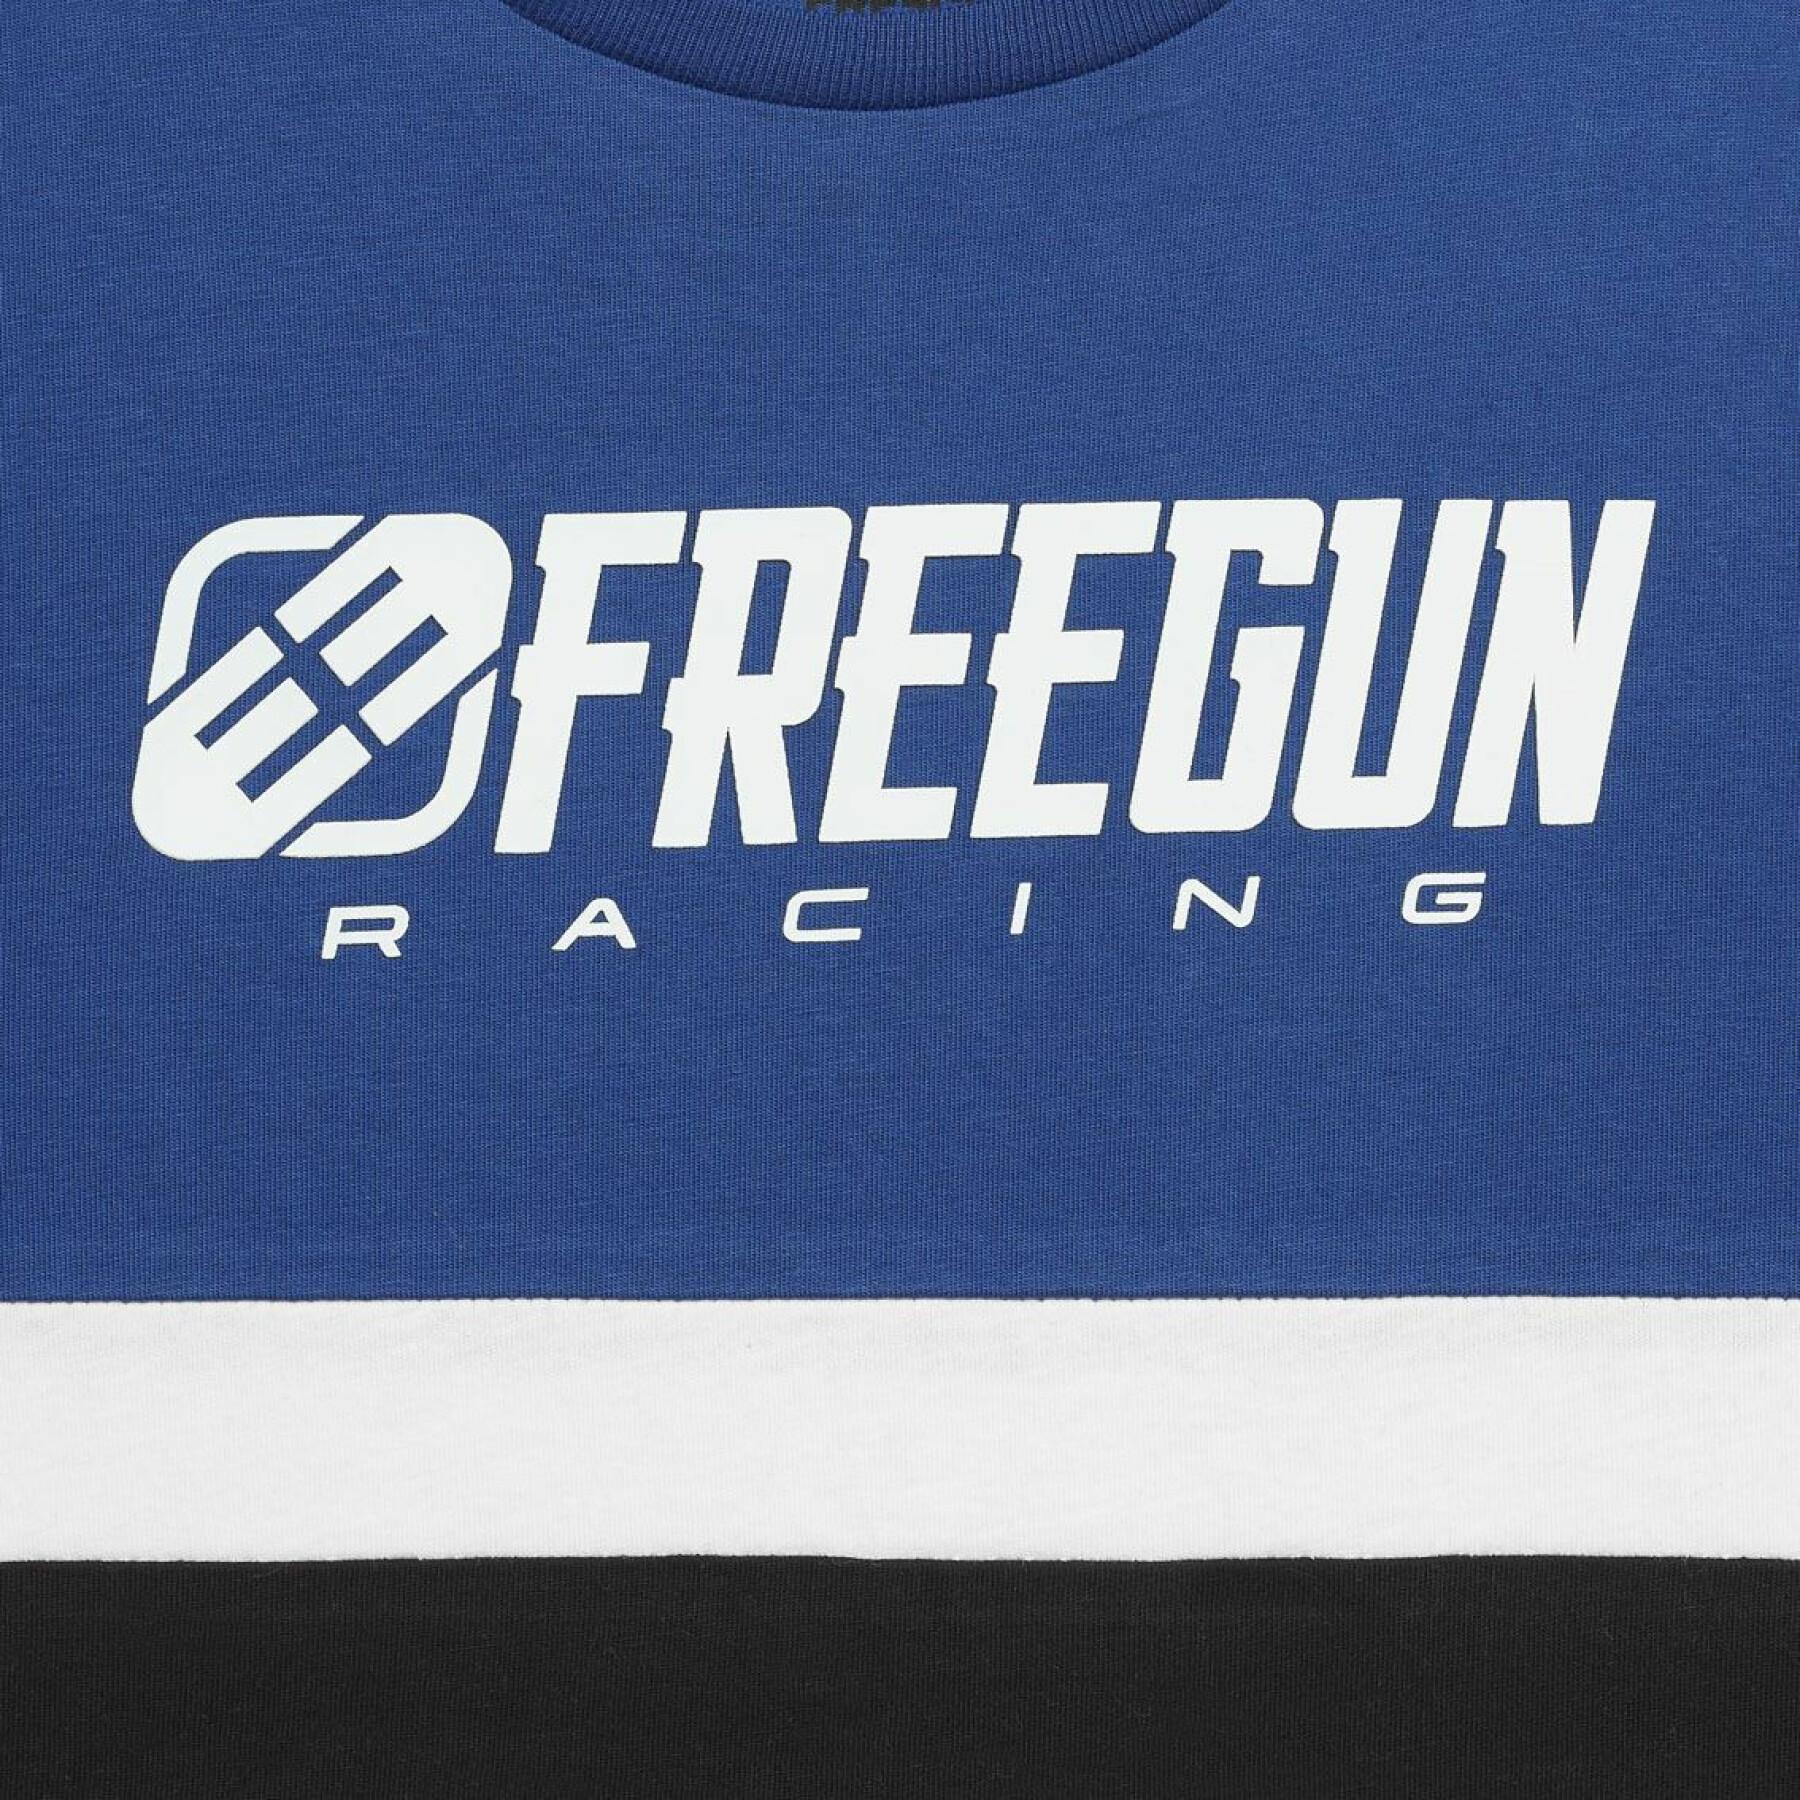 Child's T-shirt Freegun Racing